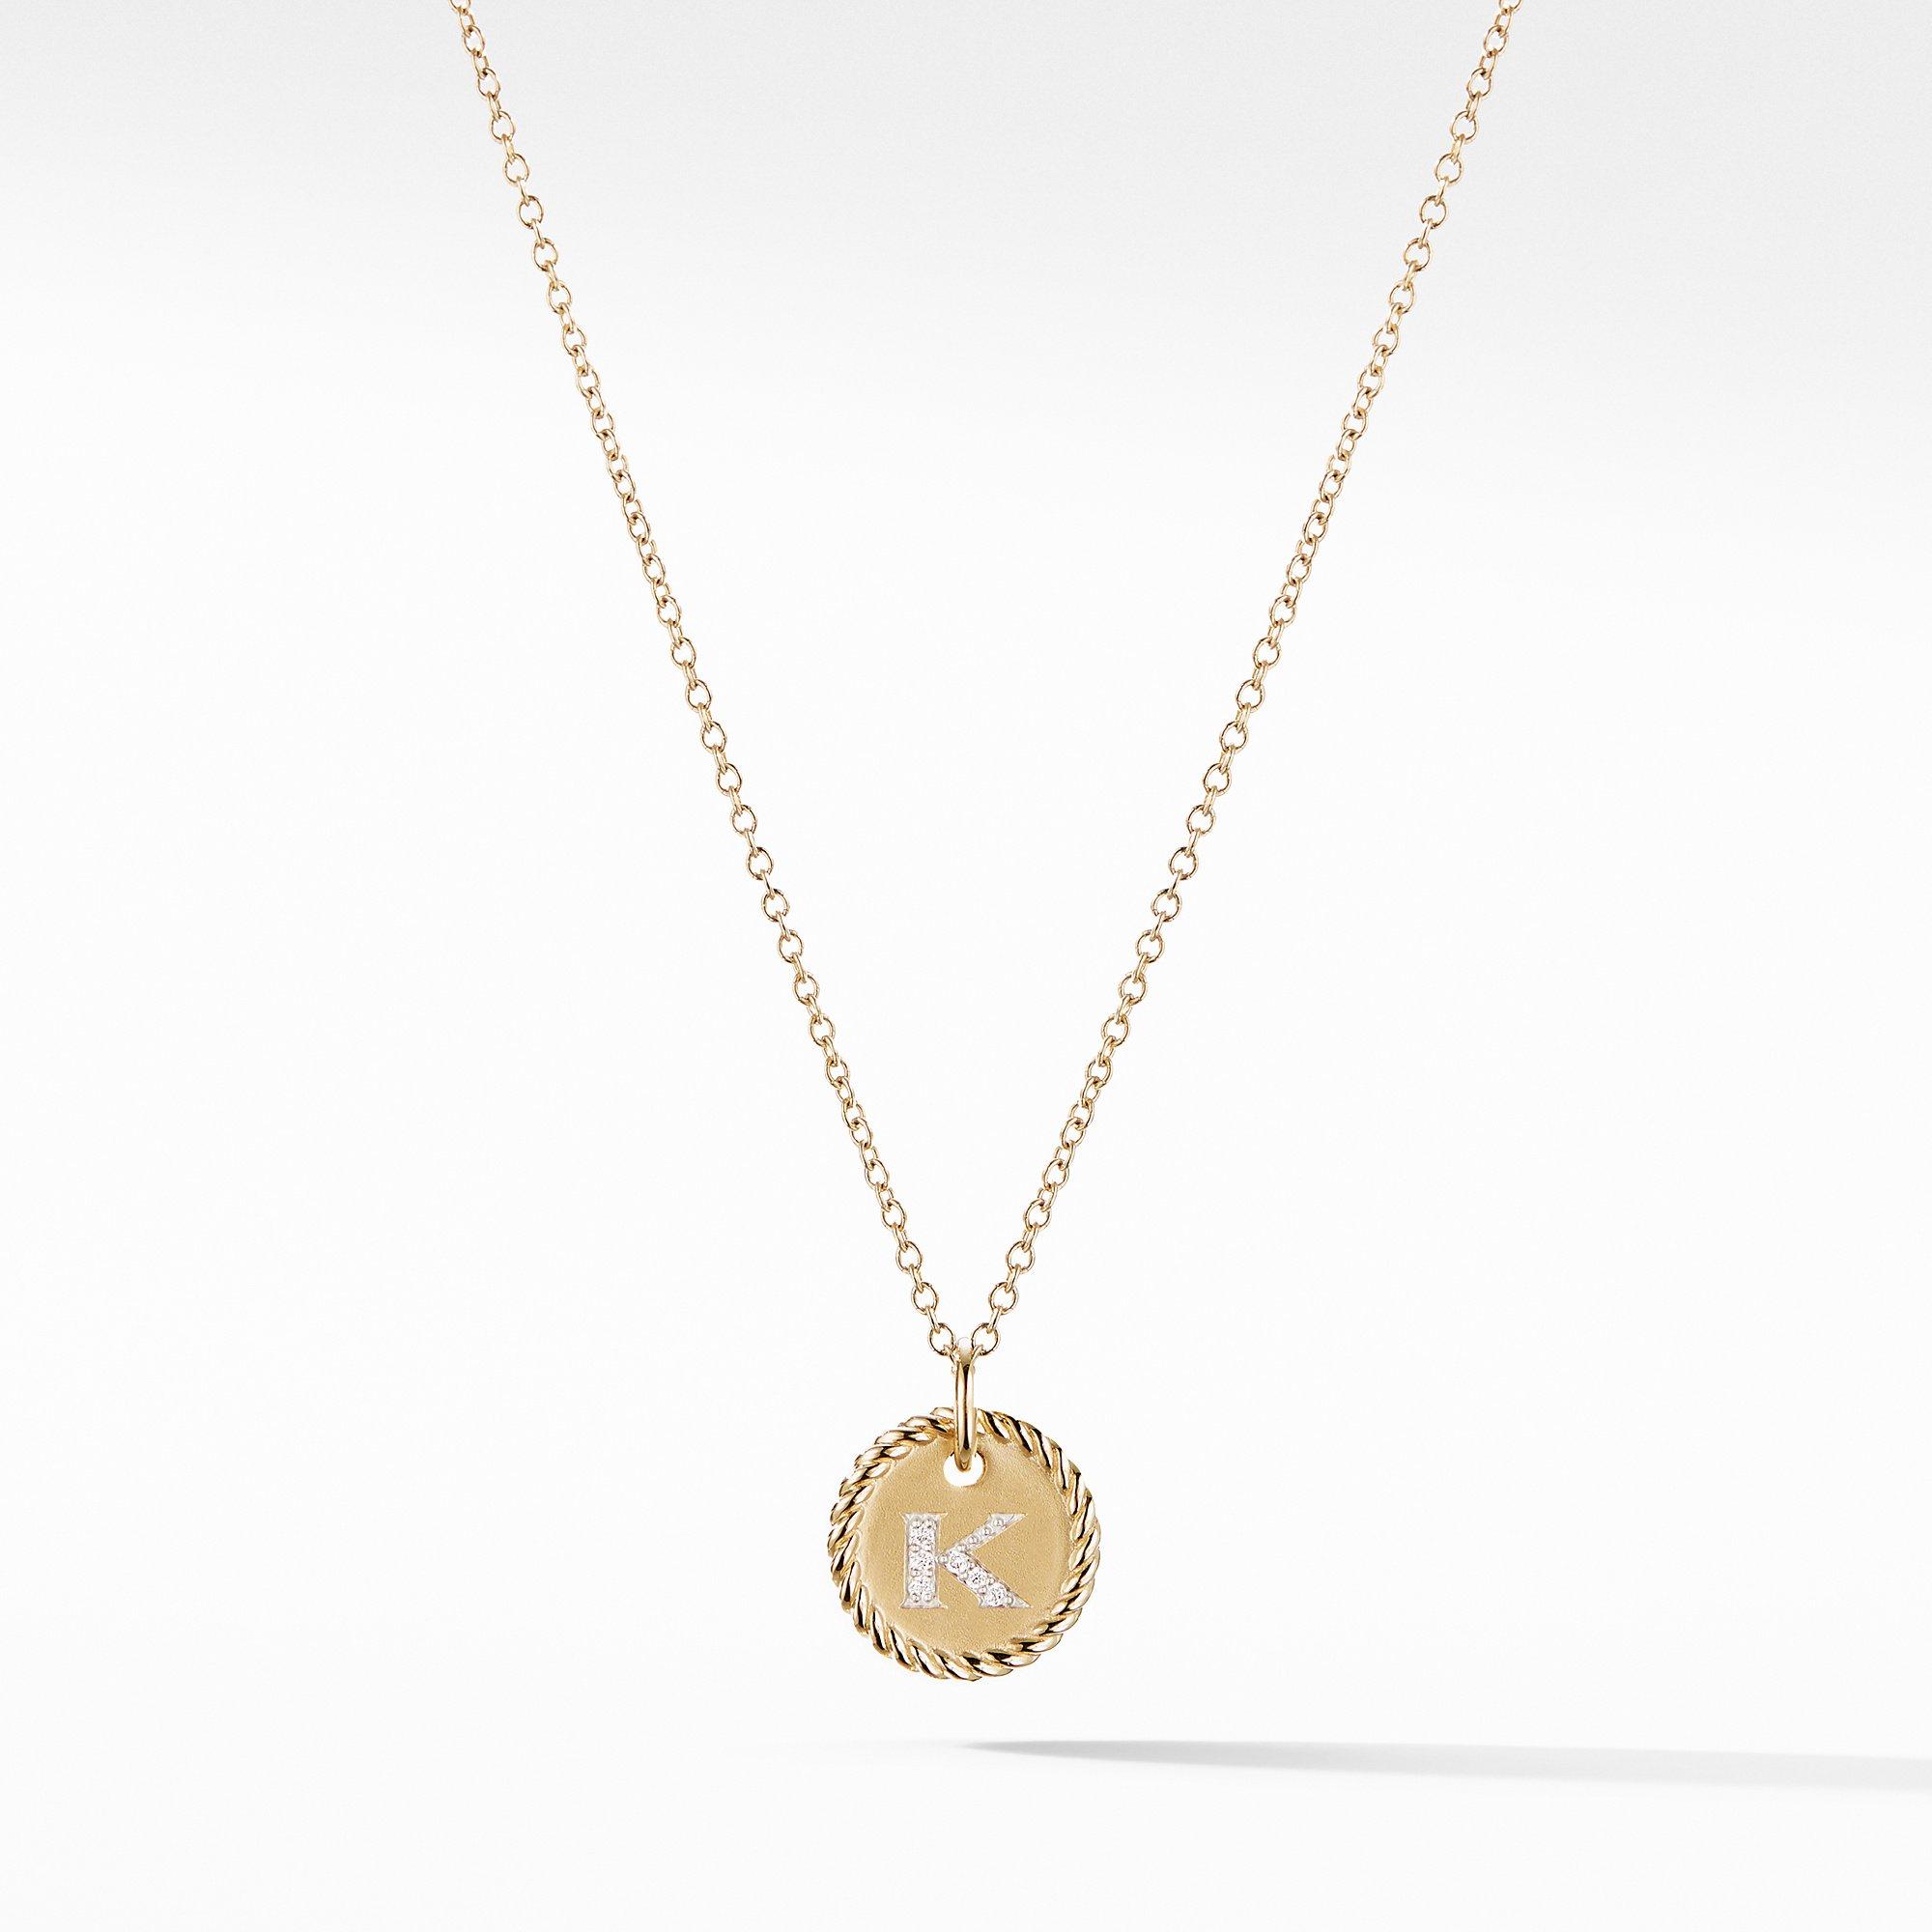 David Yurman K Initial Charm Necklace in 18k Yellow Gold with Diamonds